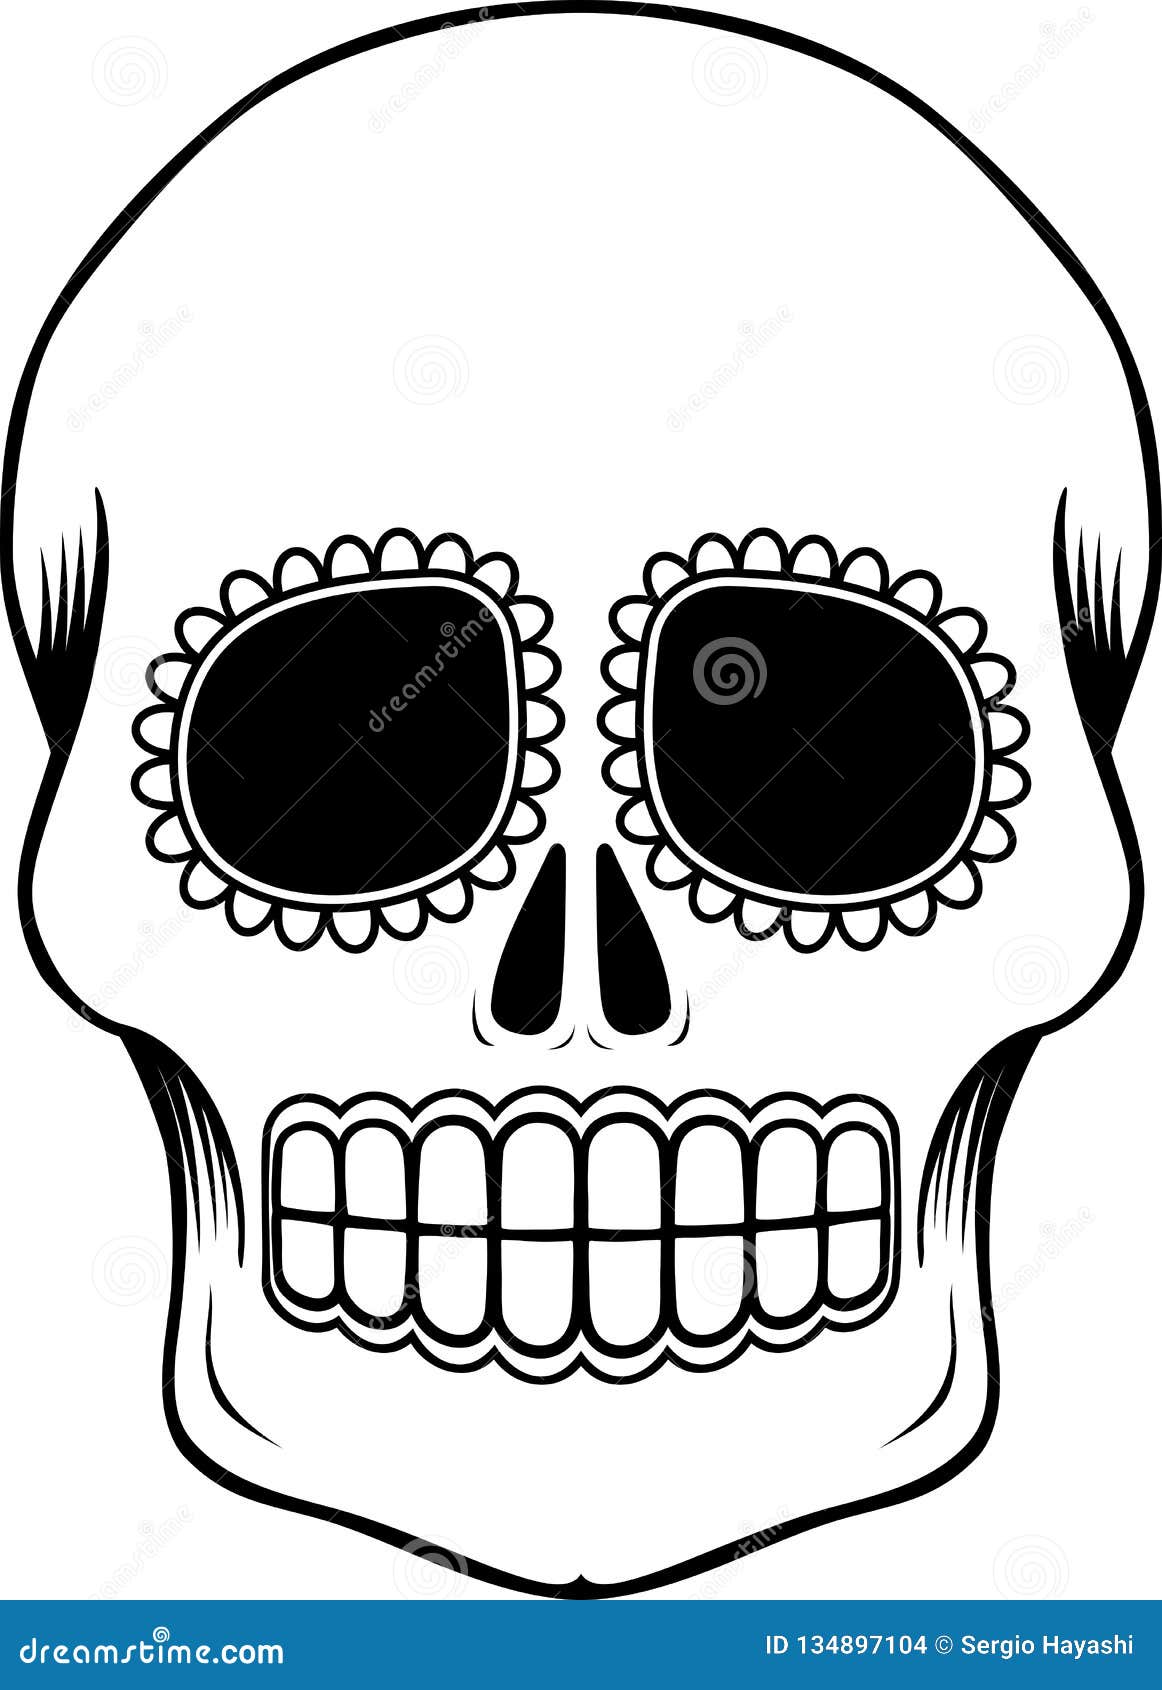 Mexican sugar skull template stock vector